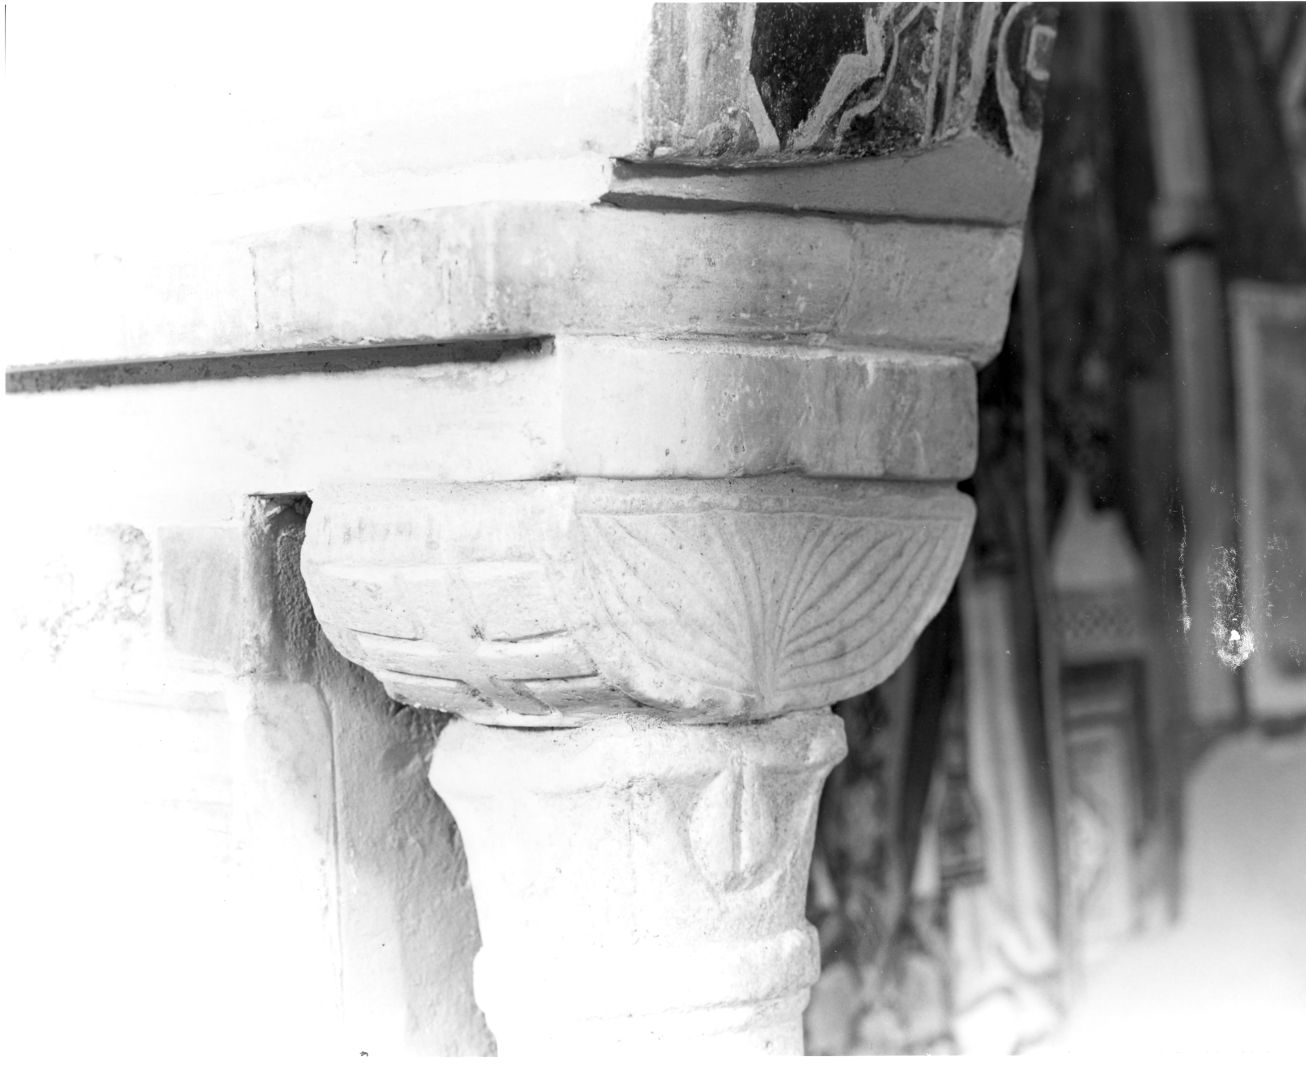 motivi decorativi vegetali (capitello - a gruccia, elemento d'insieme) - bottega campana (secc. X/ XI)